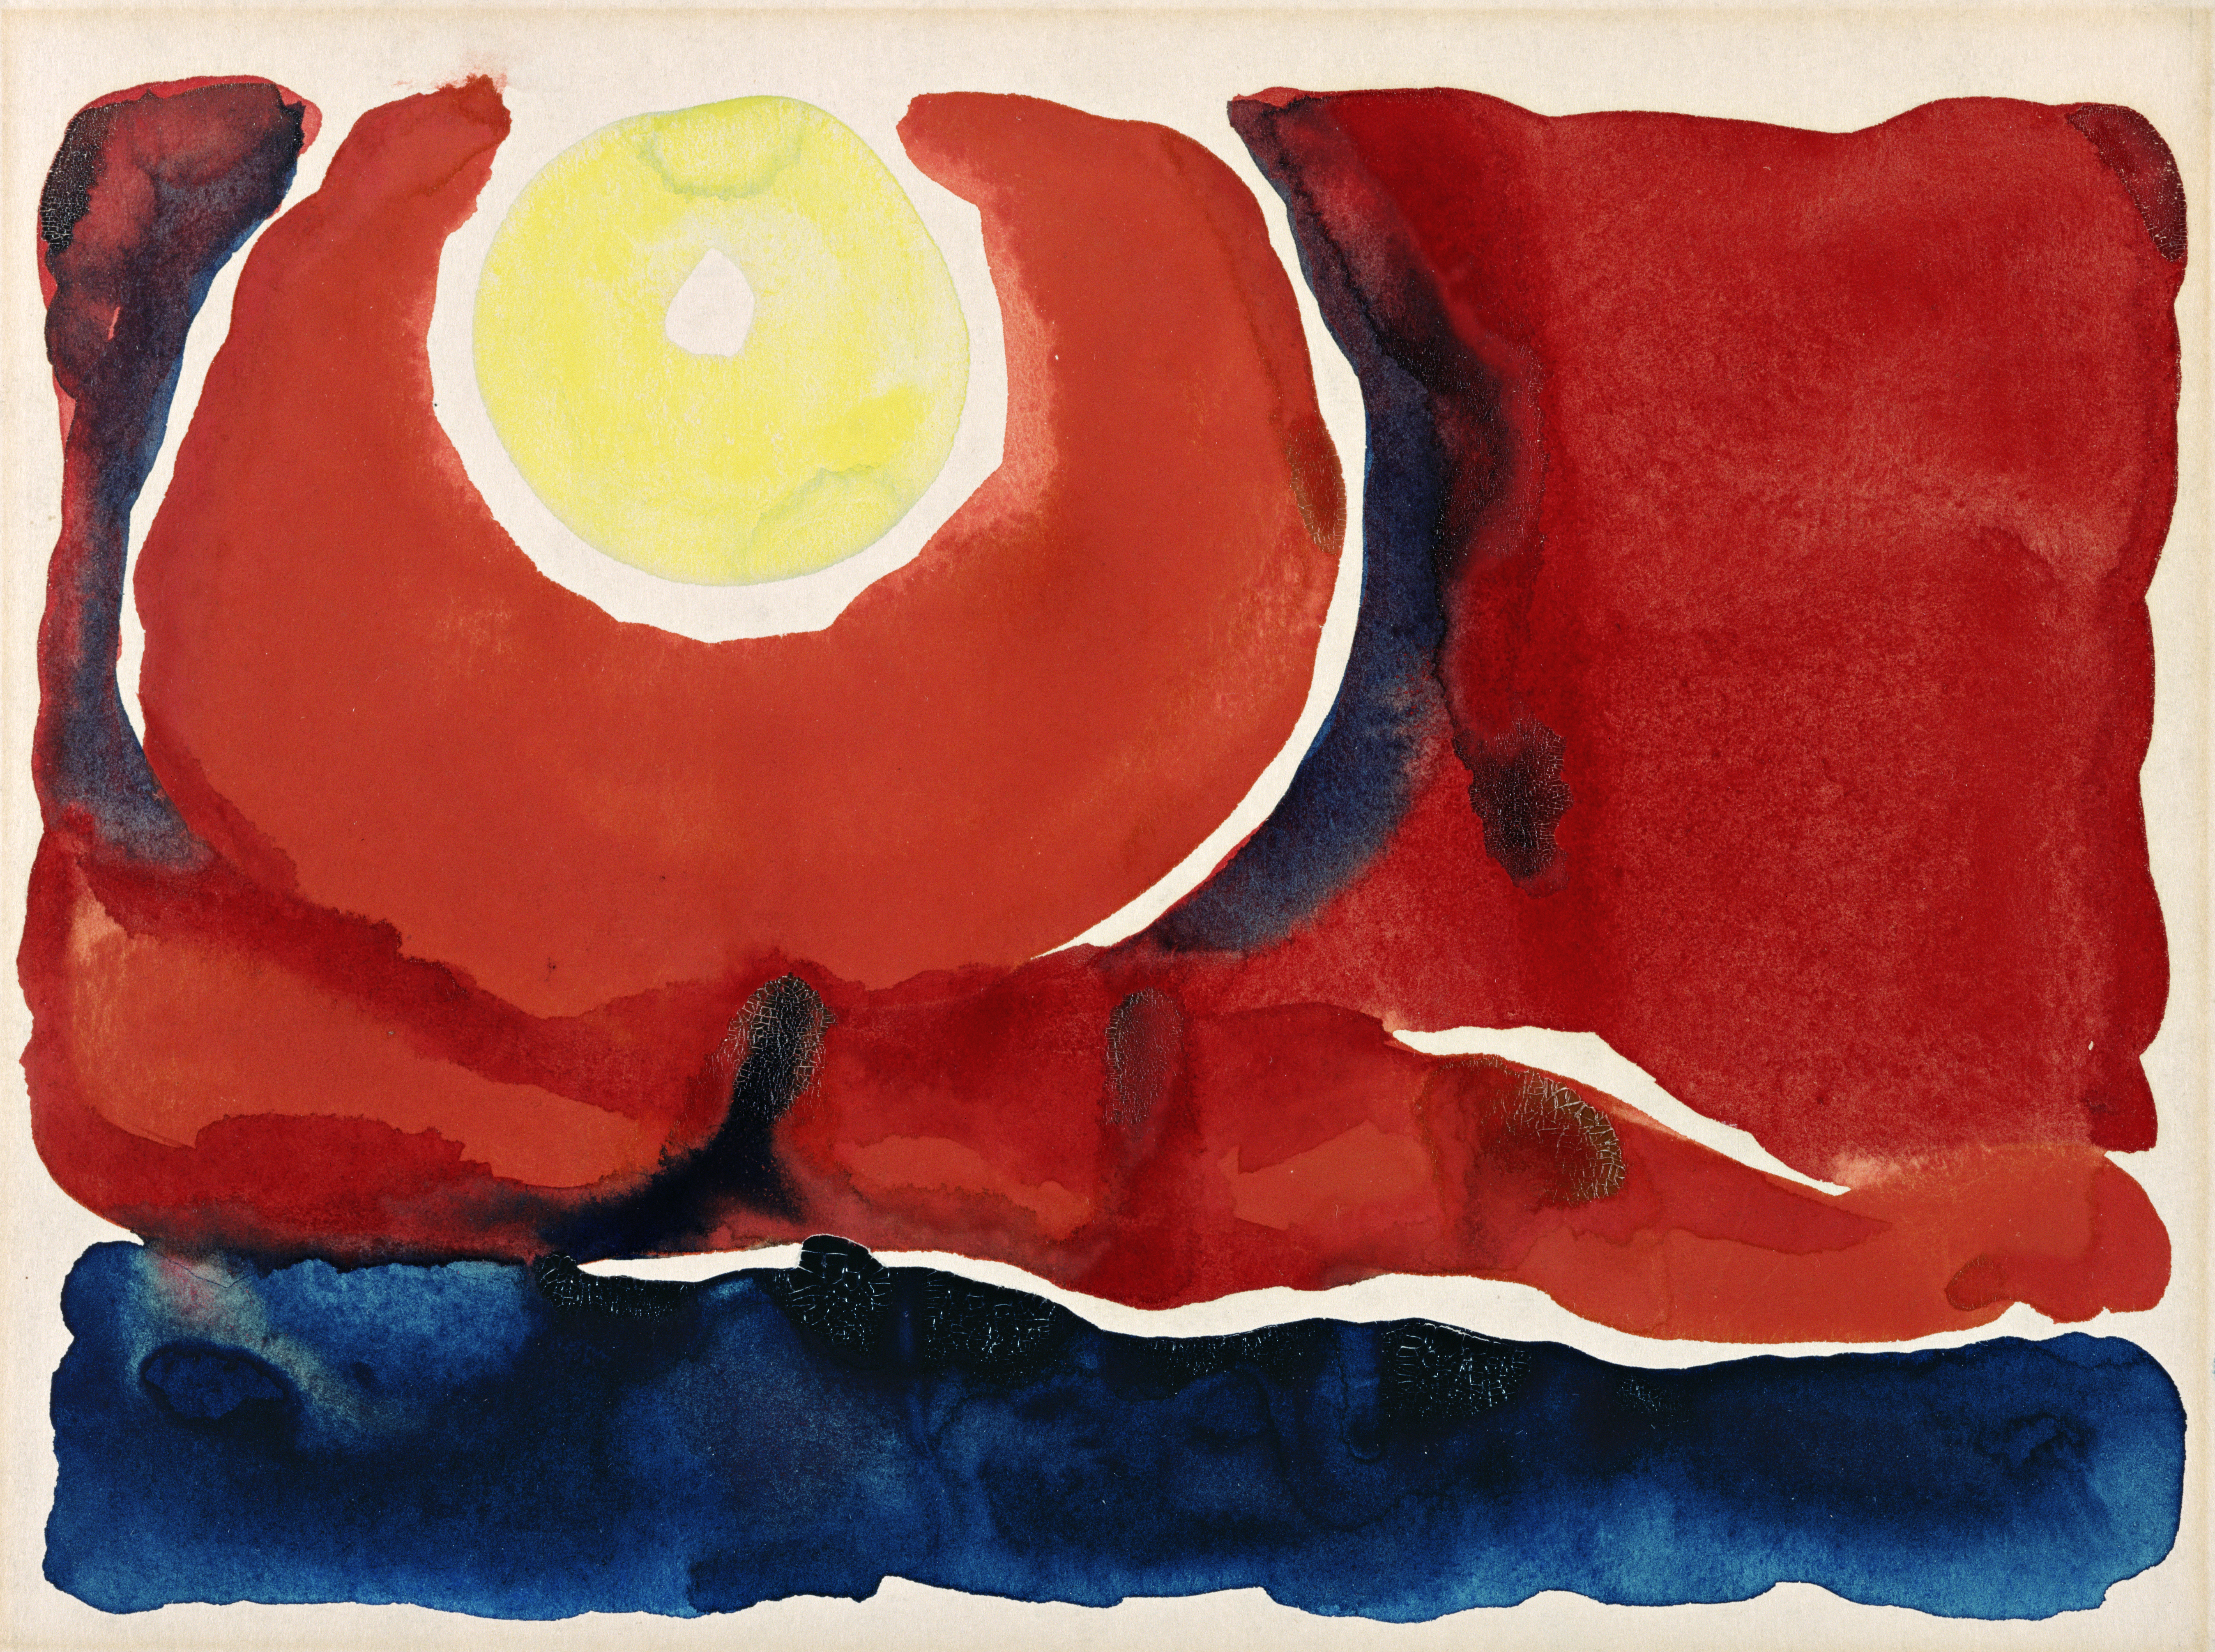 O’Keeffe’s Texas watercolors: prototype for postwar modernism?